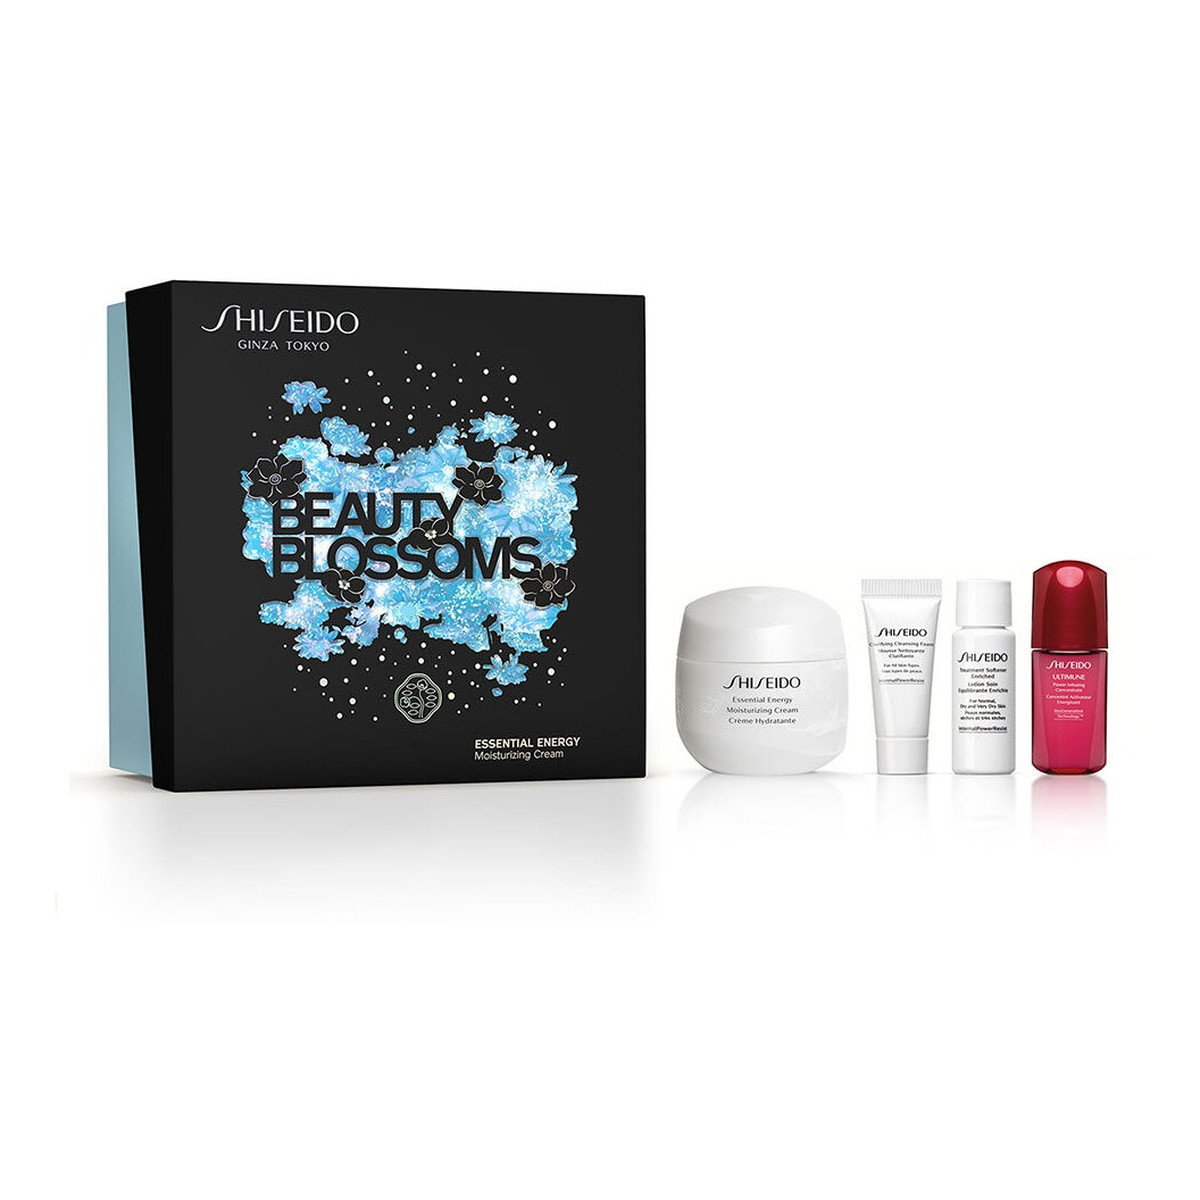 Shiseido Beauty Blossoms Zestaw essential energy moisturizing cream 50ml + ultimune power infusing 10ml + treatment softener enriched 7ml + clarifying cleansing foam 5ml